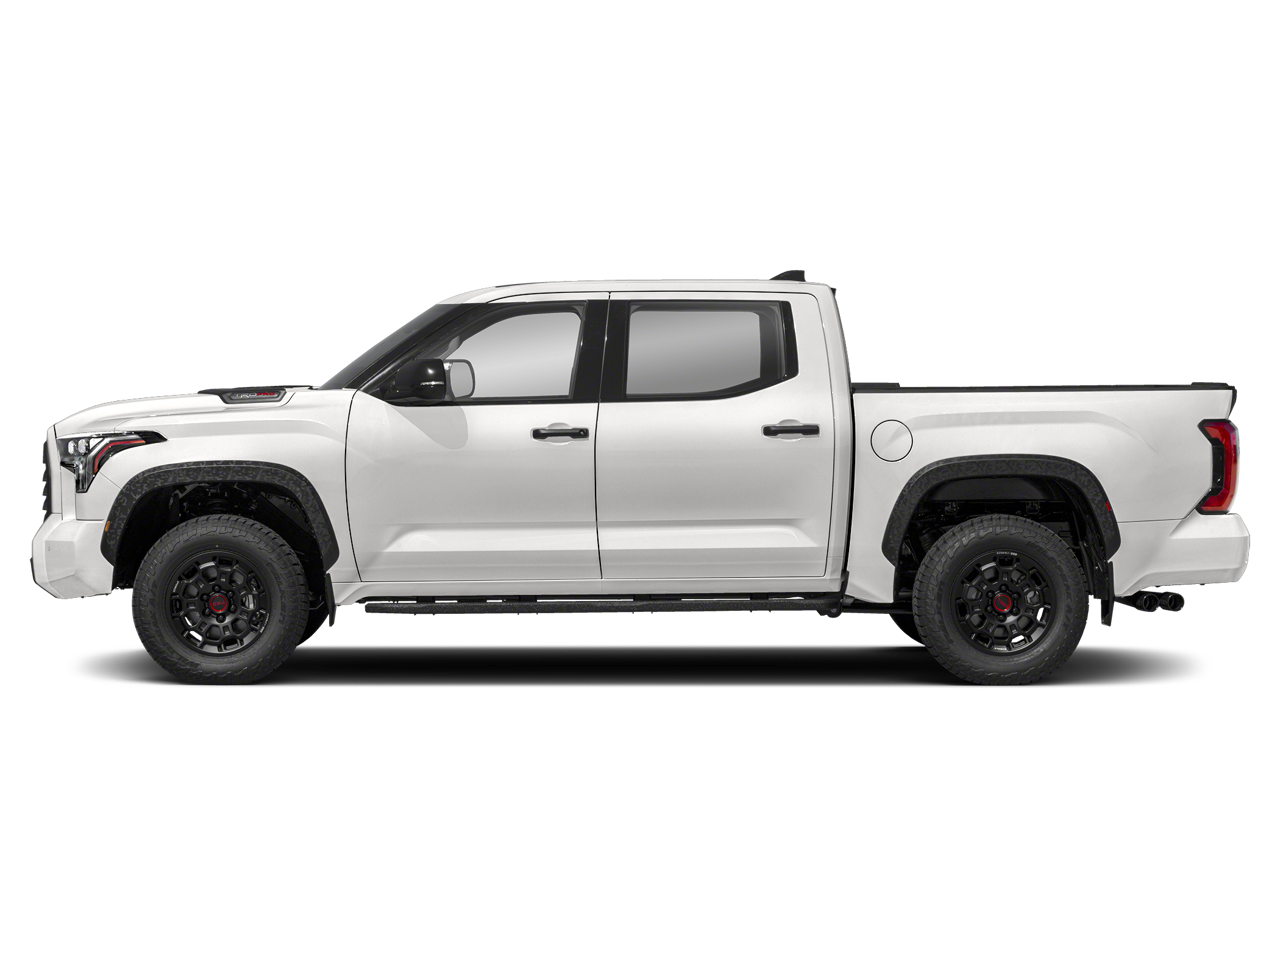 Toyota Tundra exterior - Side Profile